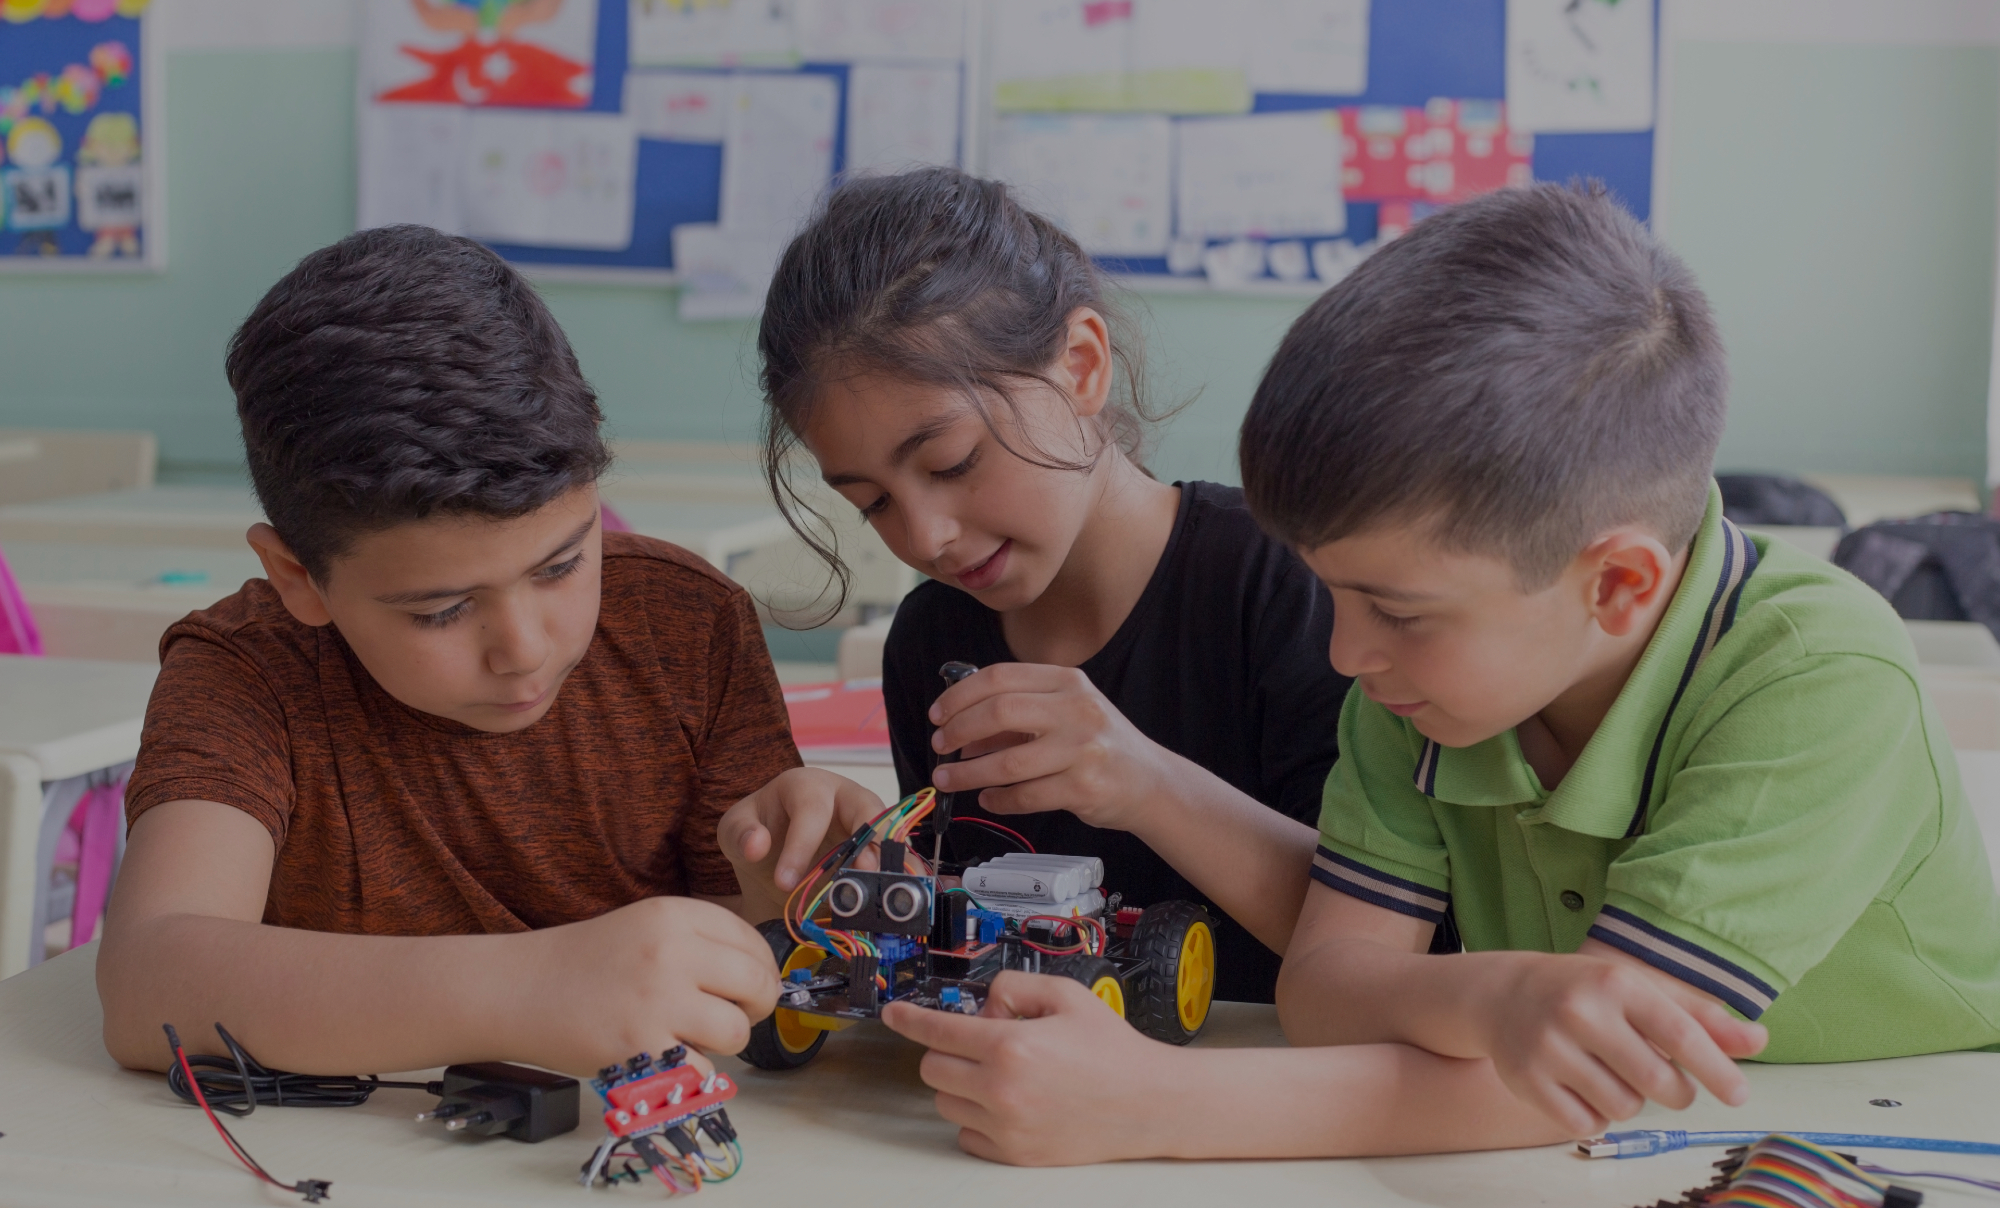 Tech education for Lebanon’s next generation